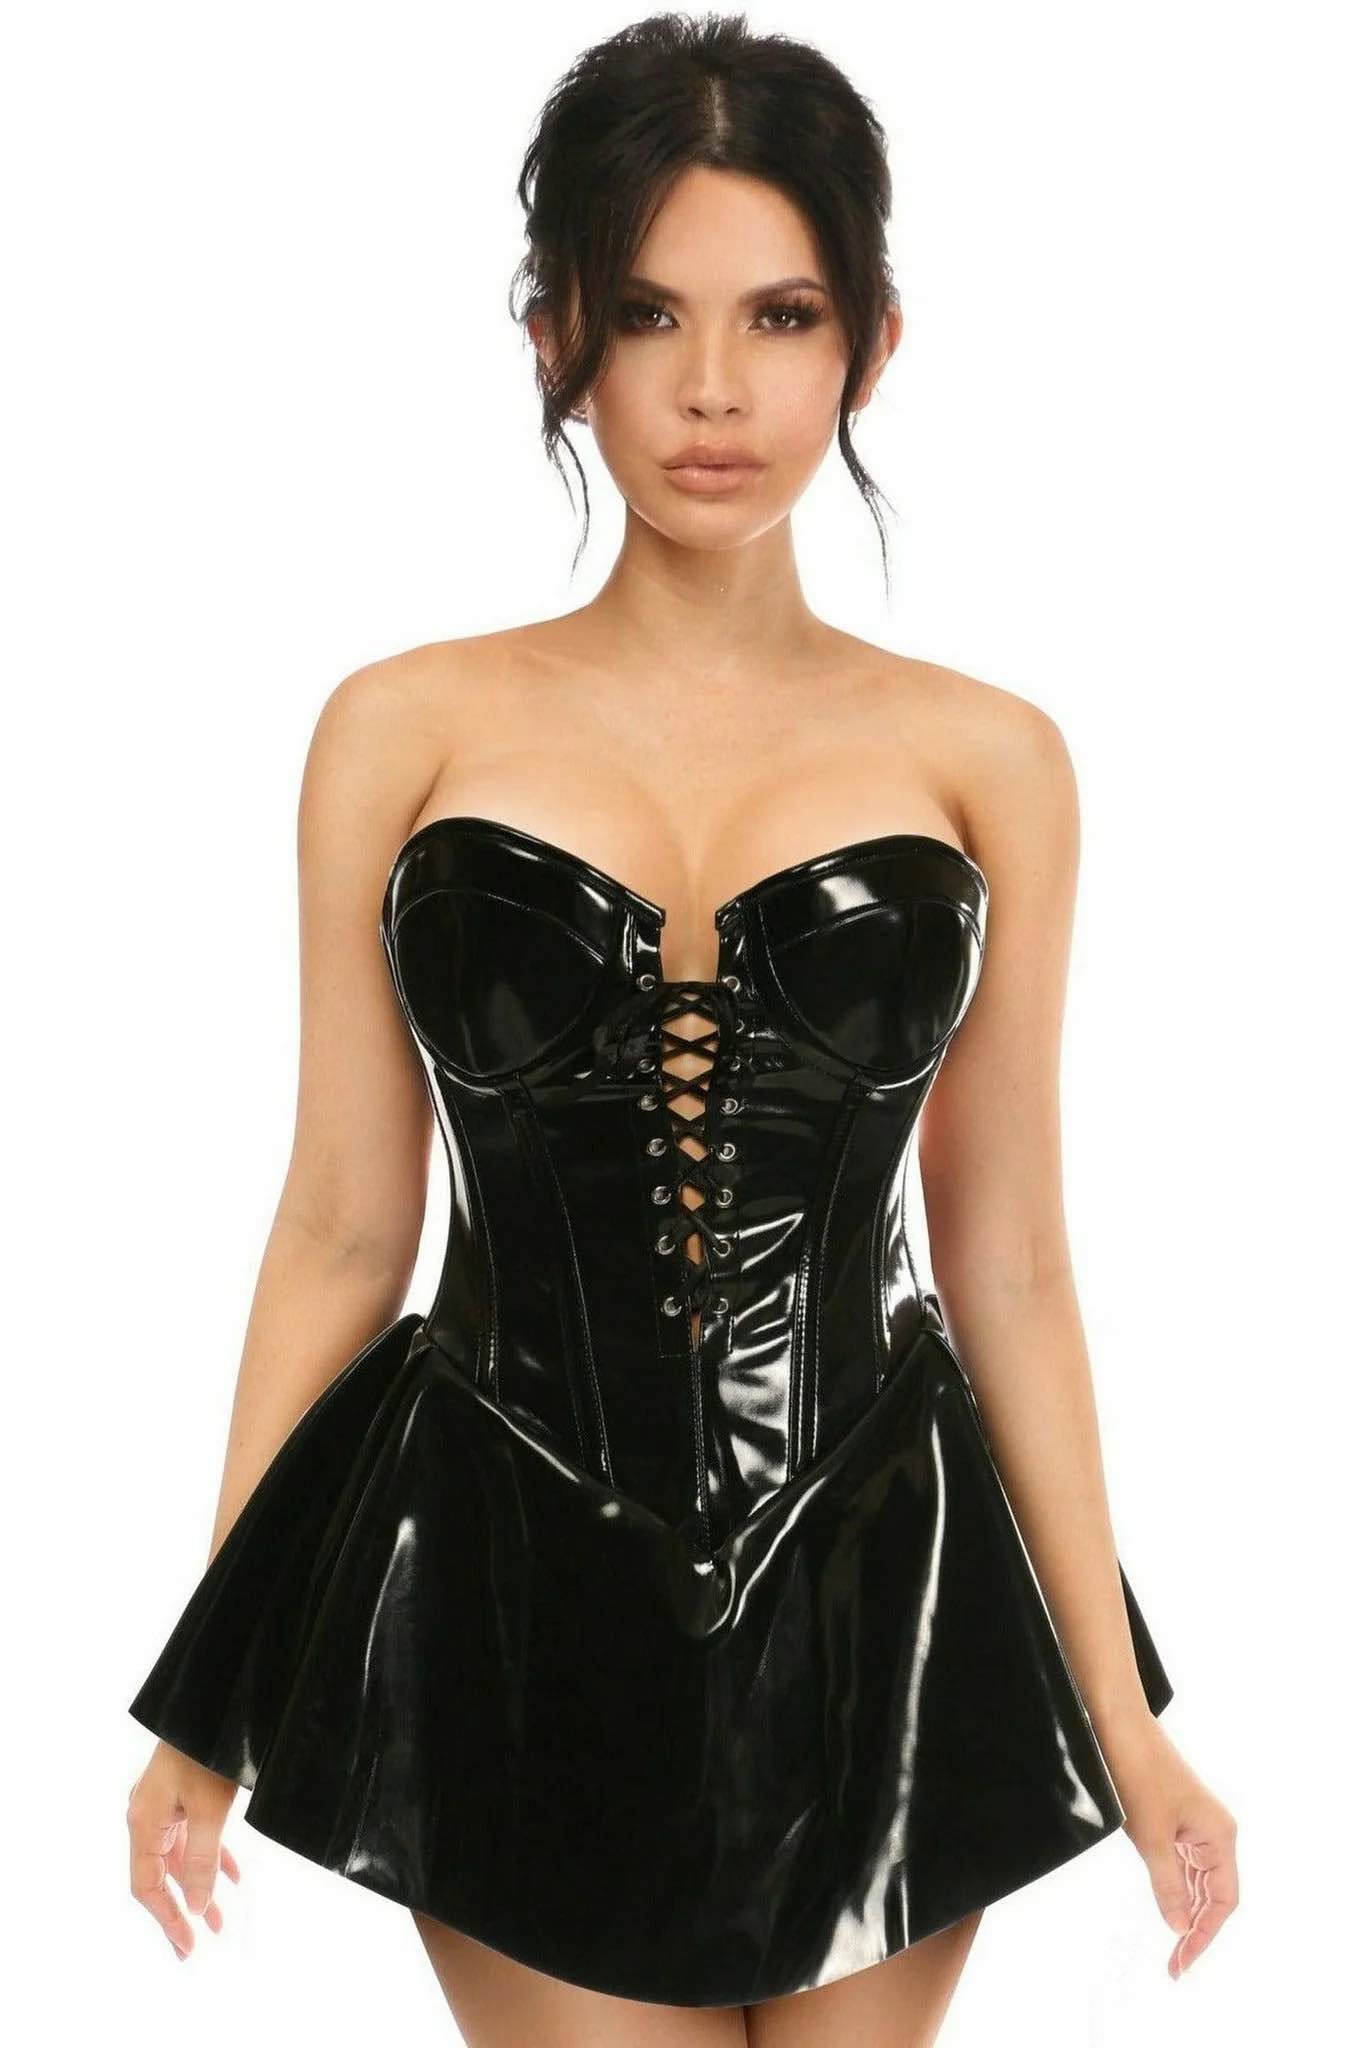 Model wearing the Patent Vinyl Corset Dress, front view.